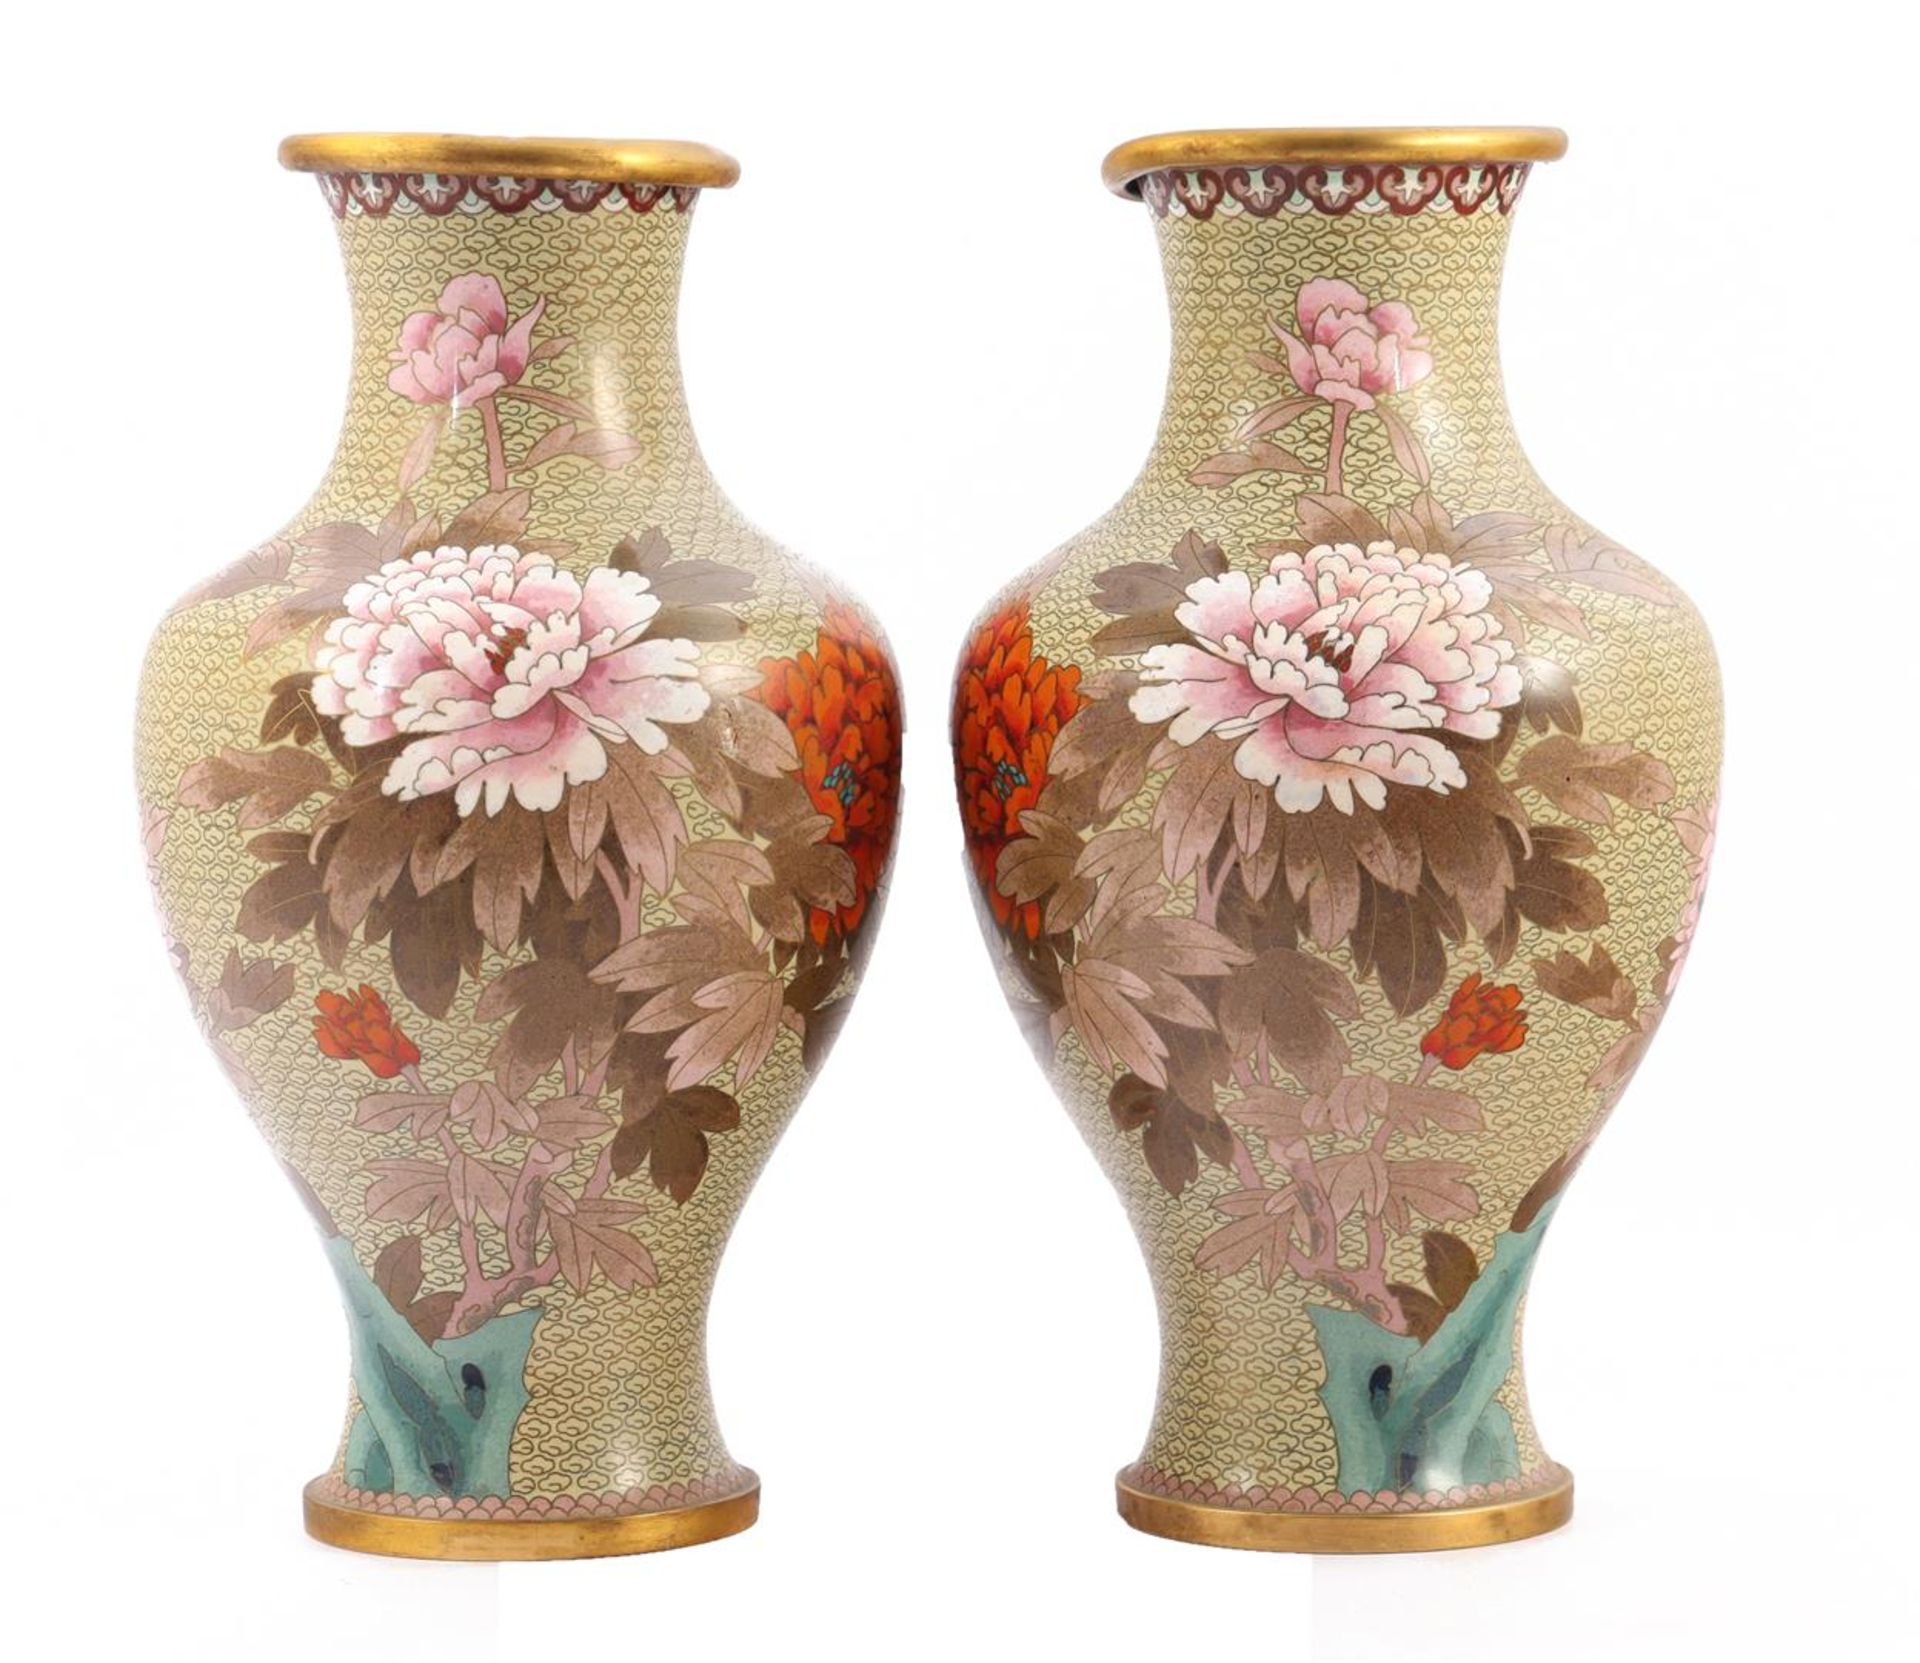 2 Asian cloisonne vases